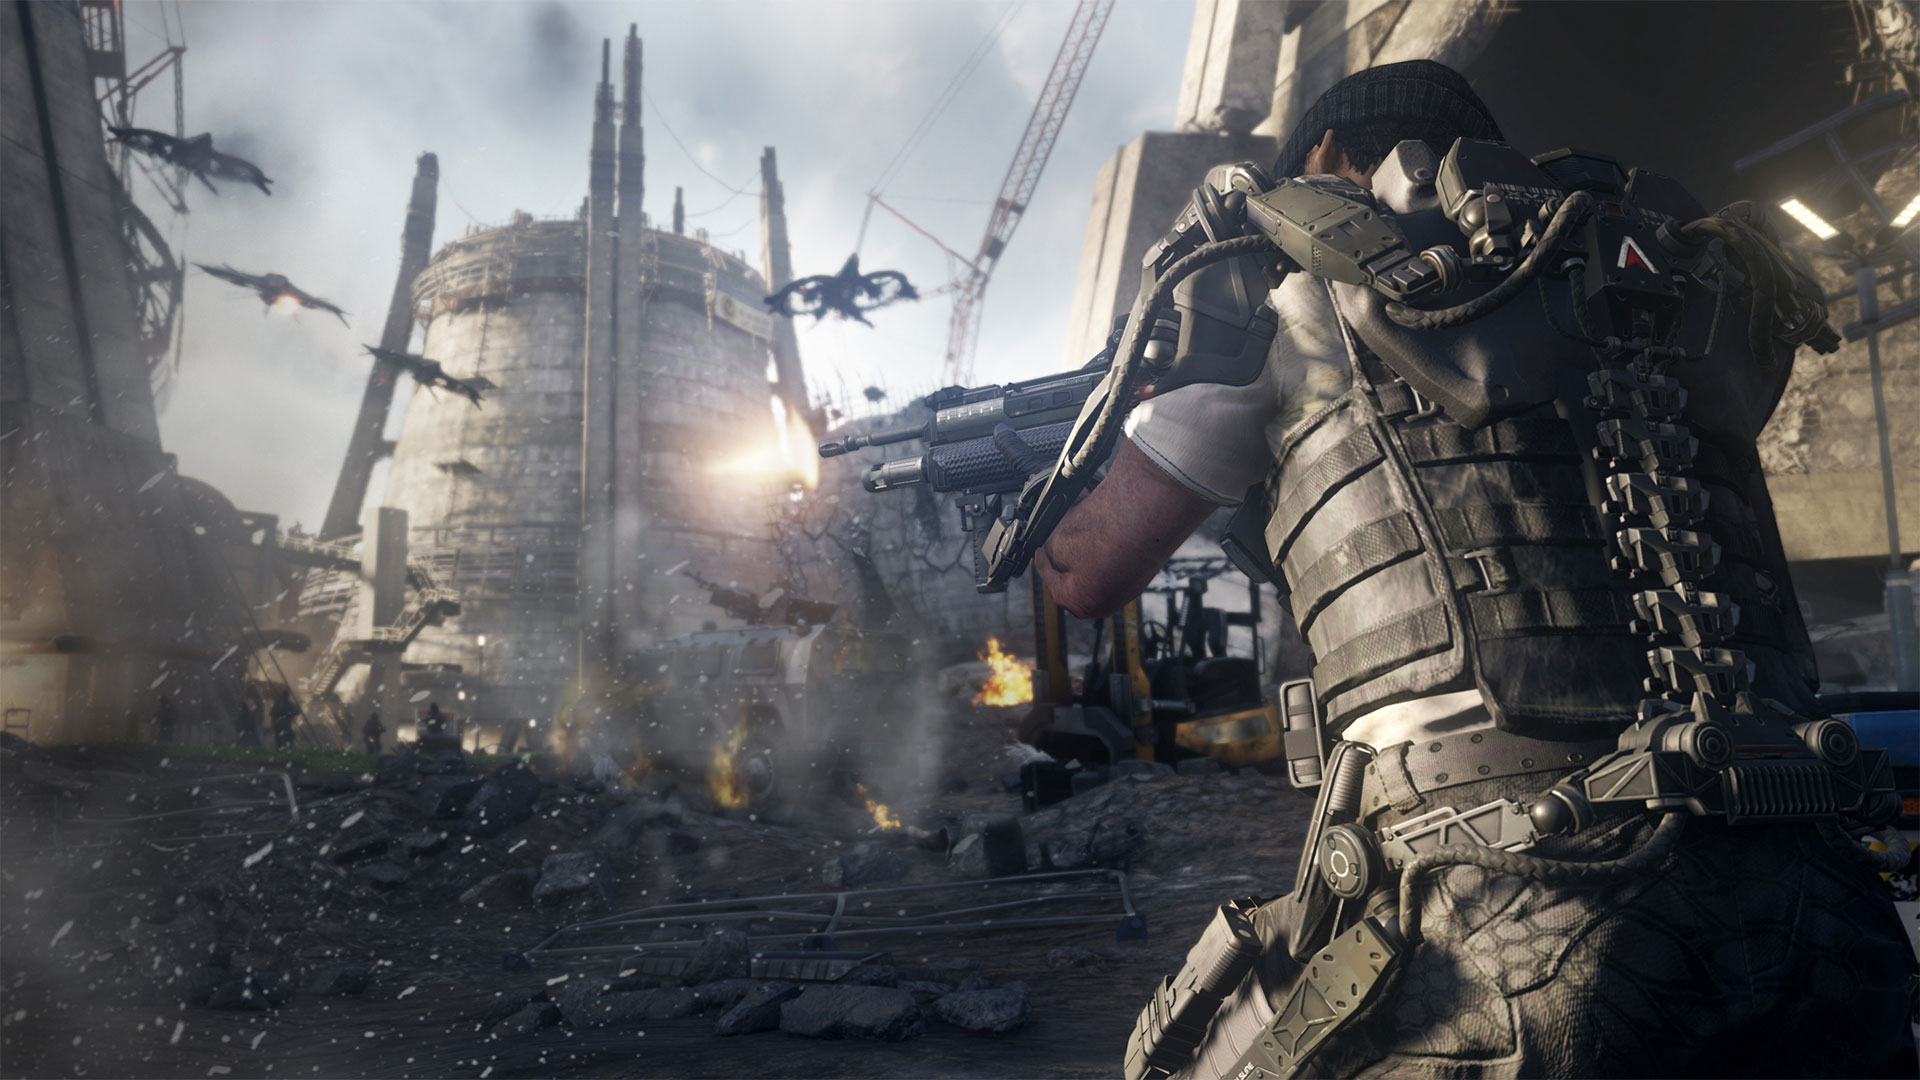 Call of Duty: Advanced Warfare (USED) - PlayStation 4